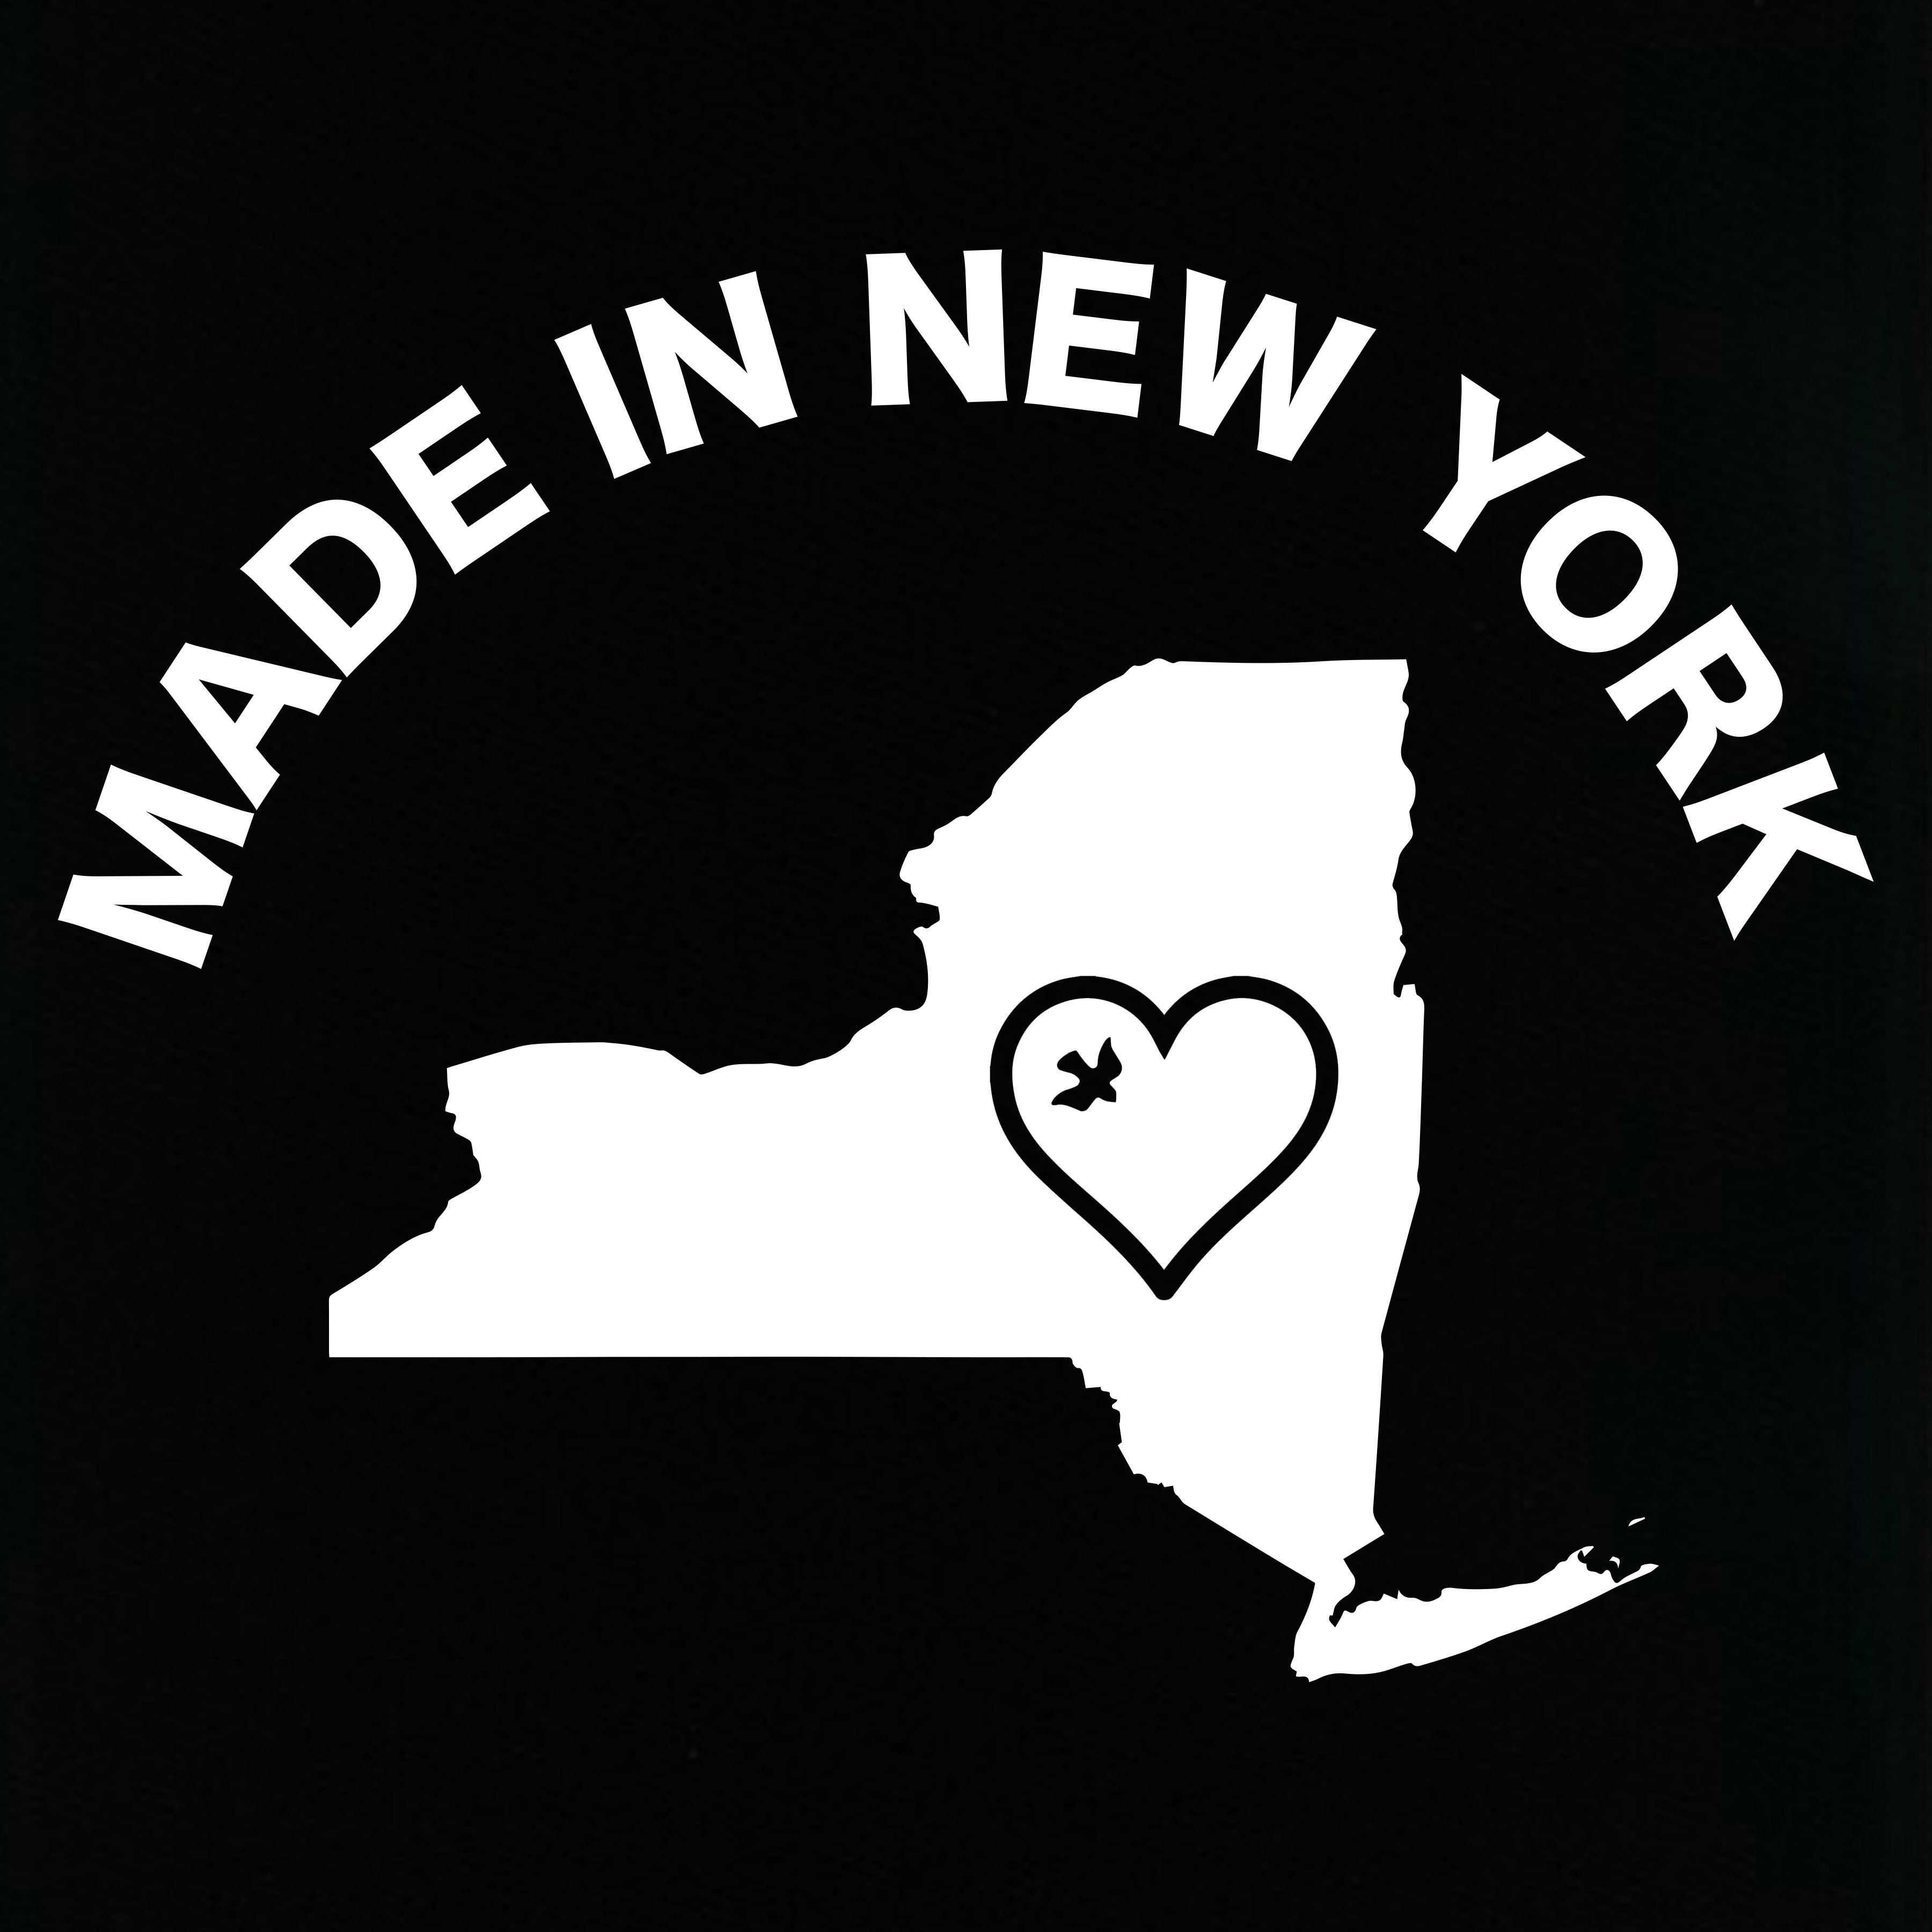 MADE NEW YORK / Short-Sleeve Unisex T-Shirt